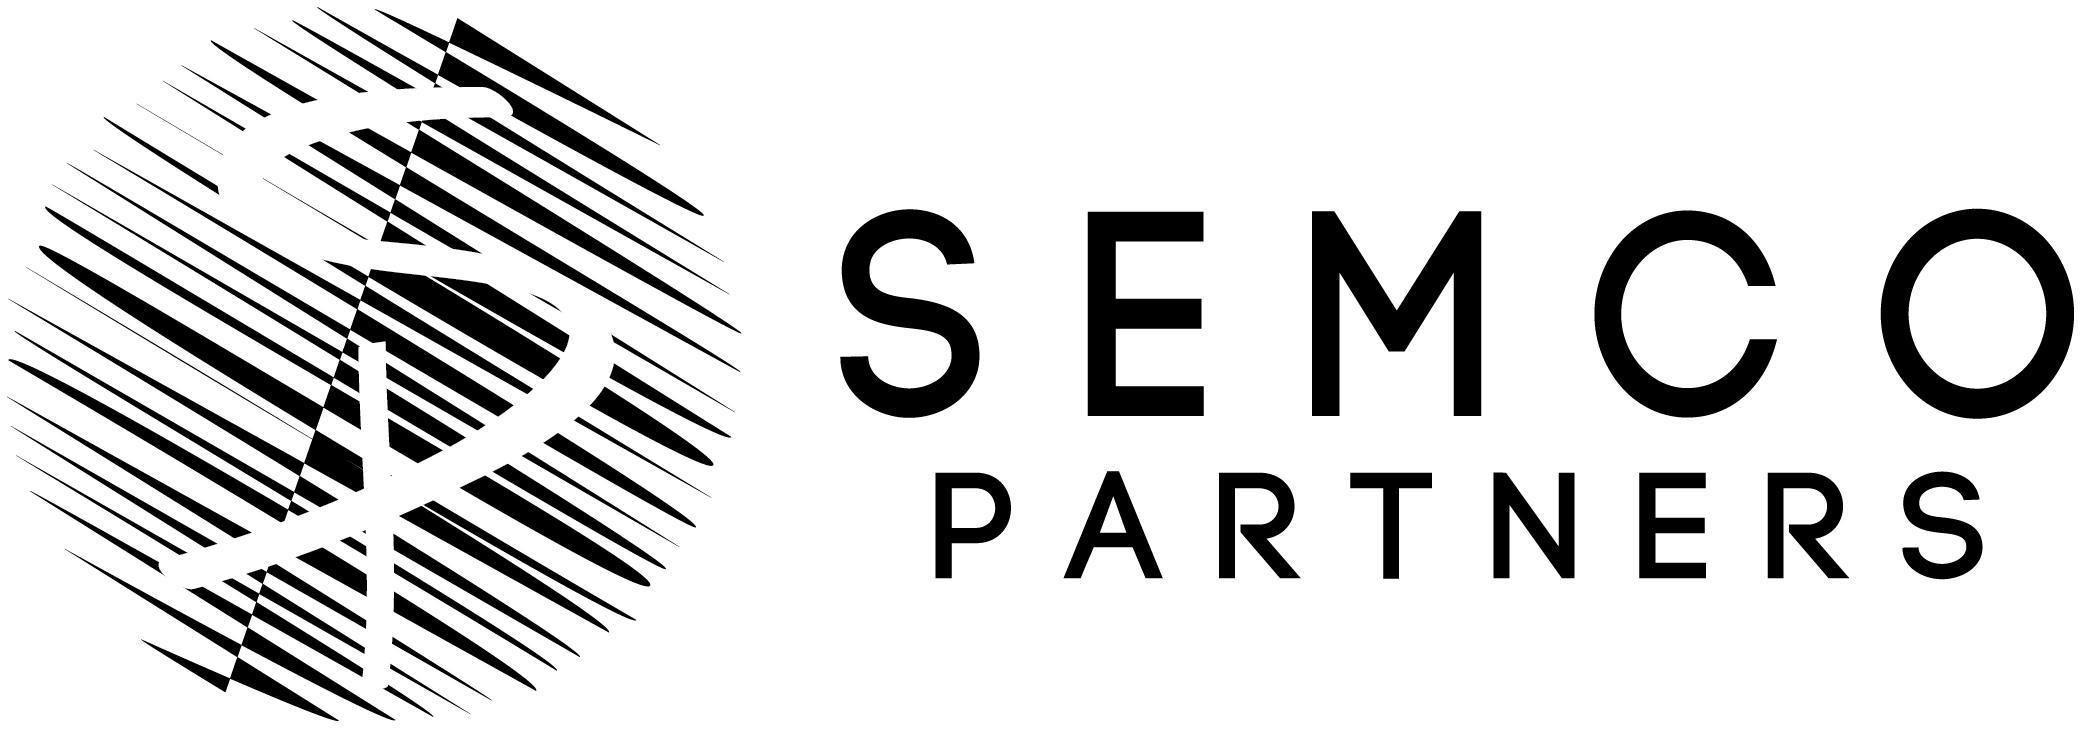 Semco Logo - Semco Partners Competitors, Revenue and Employees Company